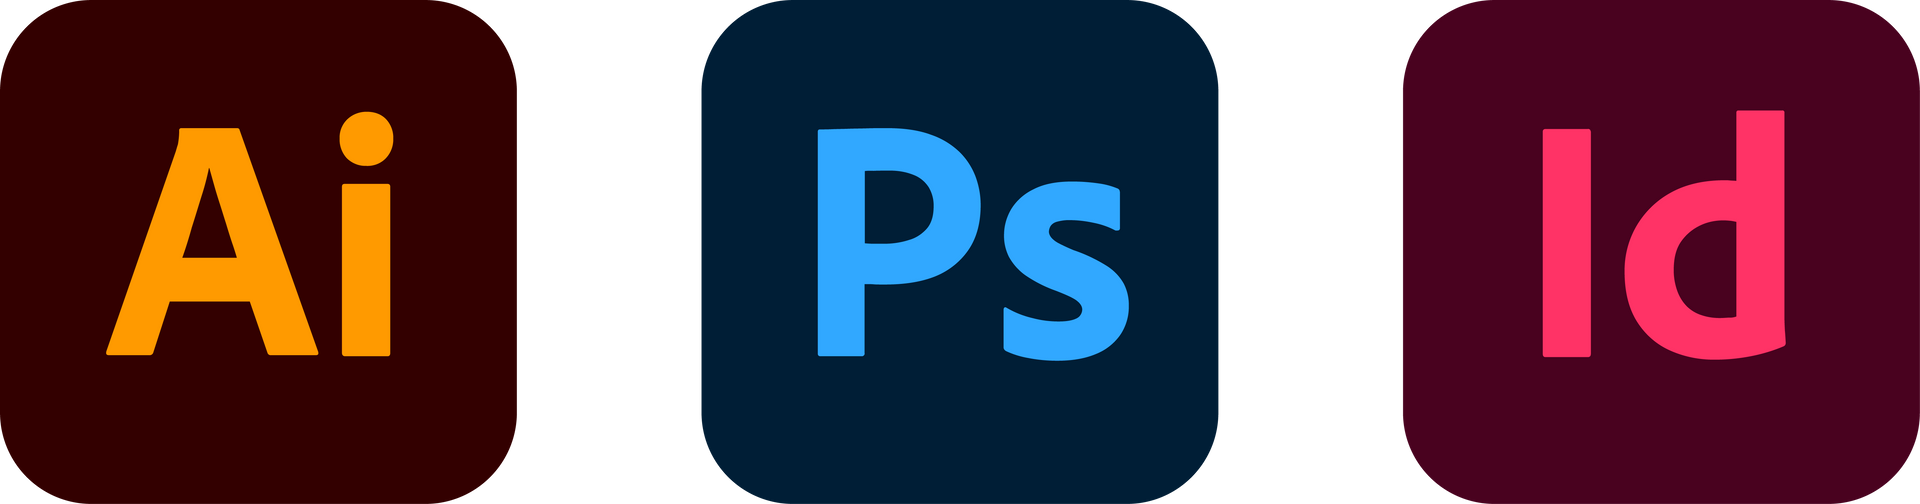 Adobe Suite: Illustrator, Photoshop, and InDesign